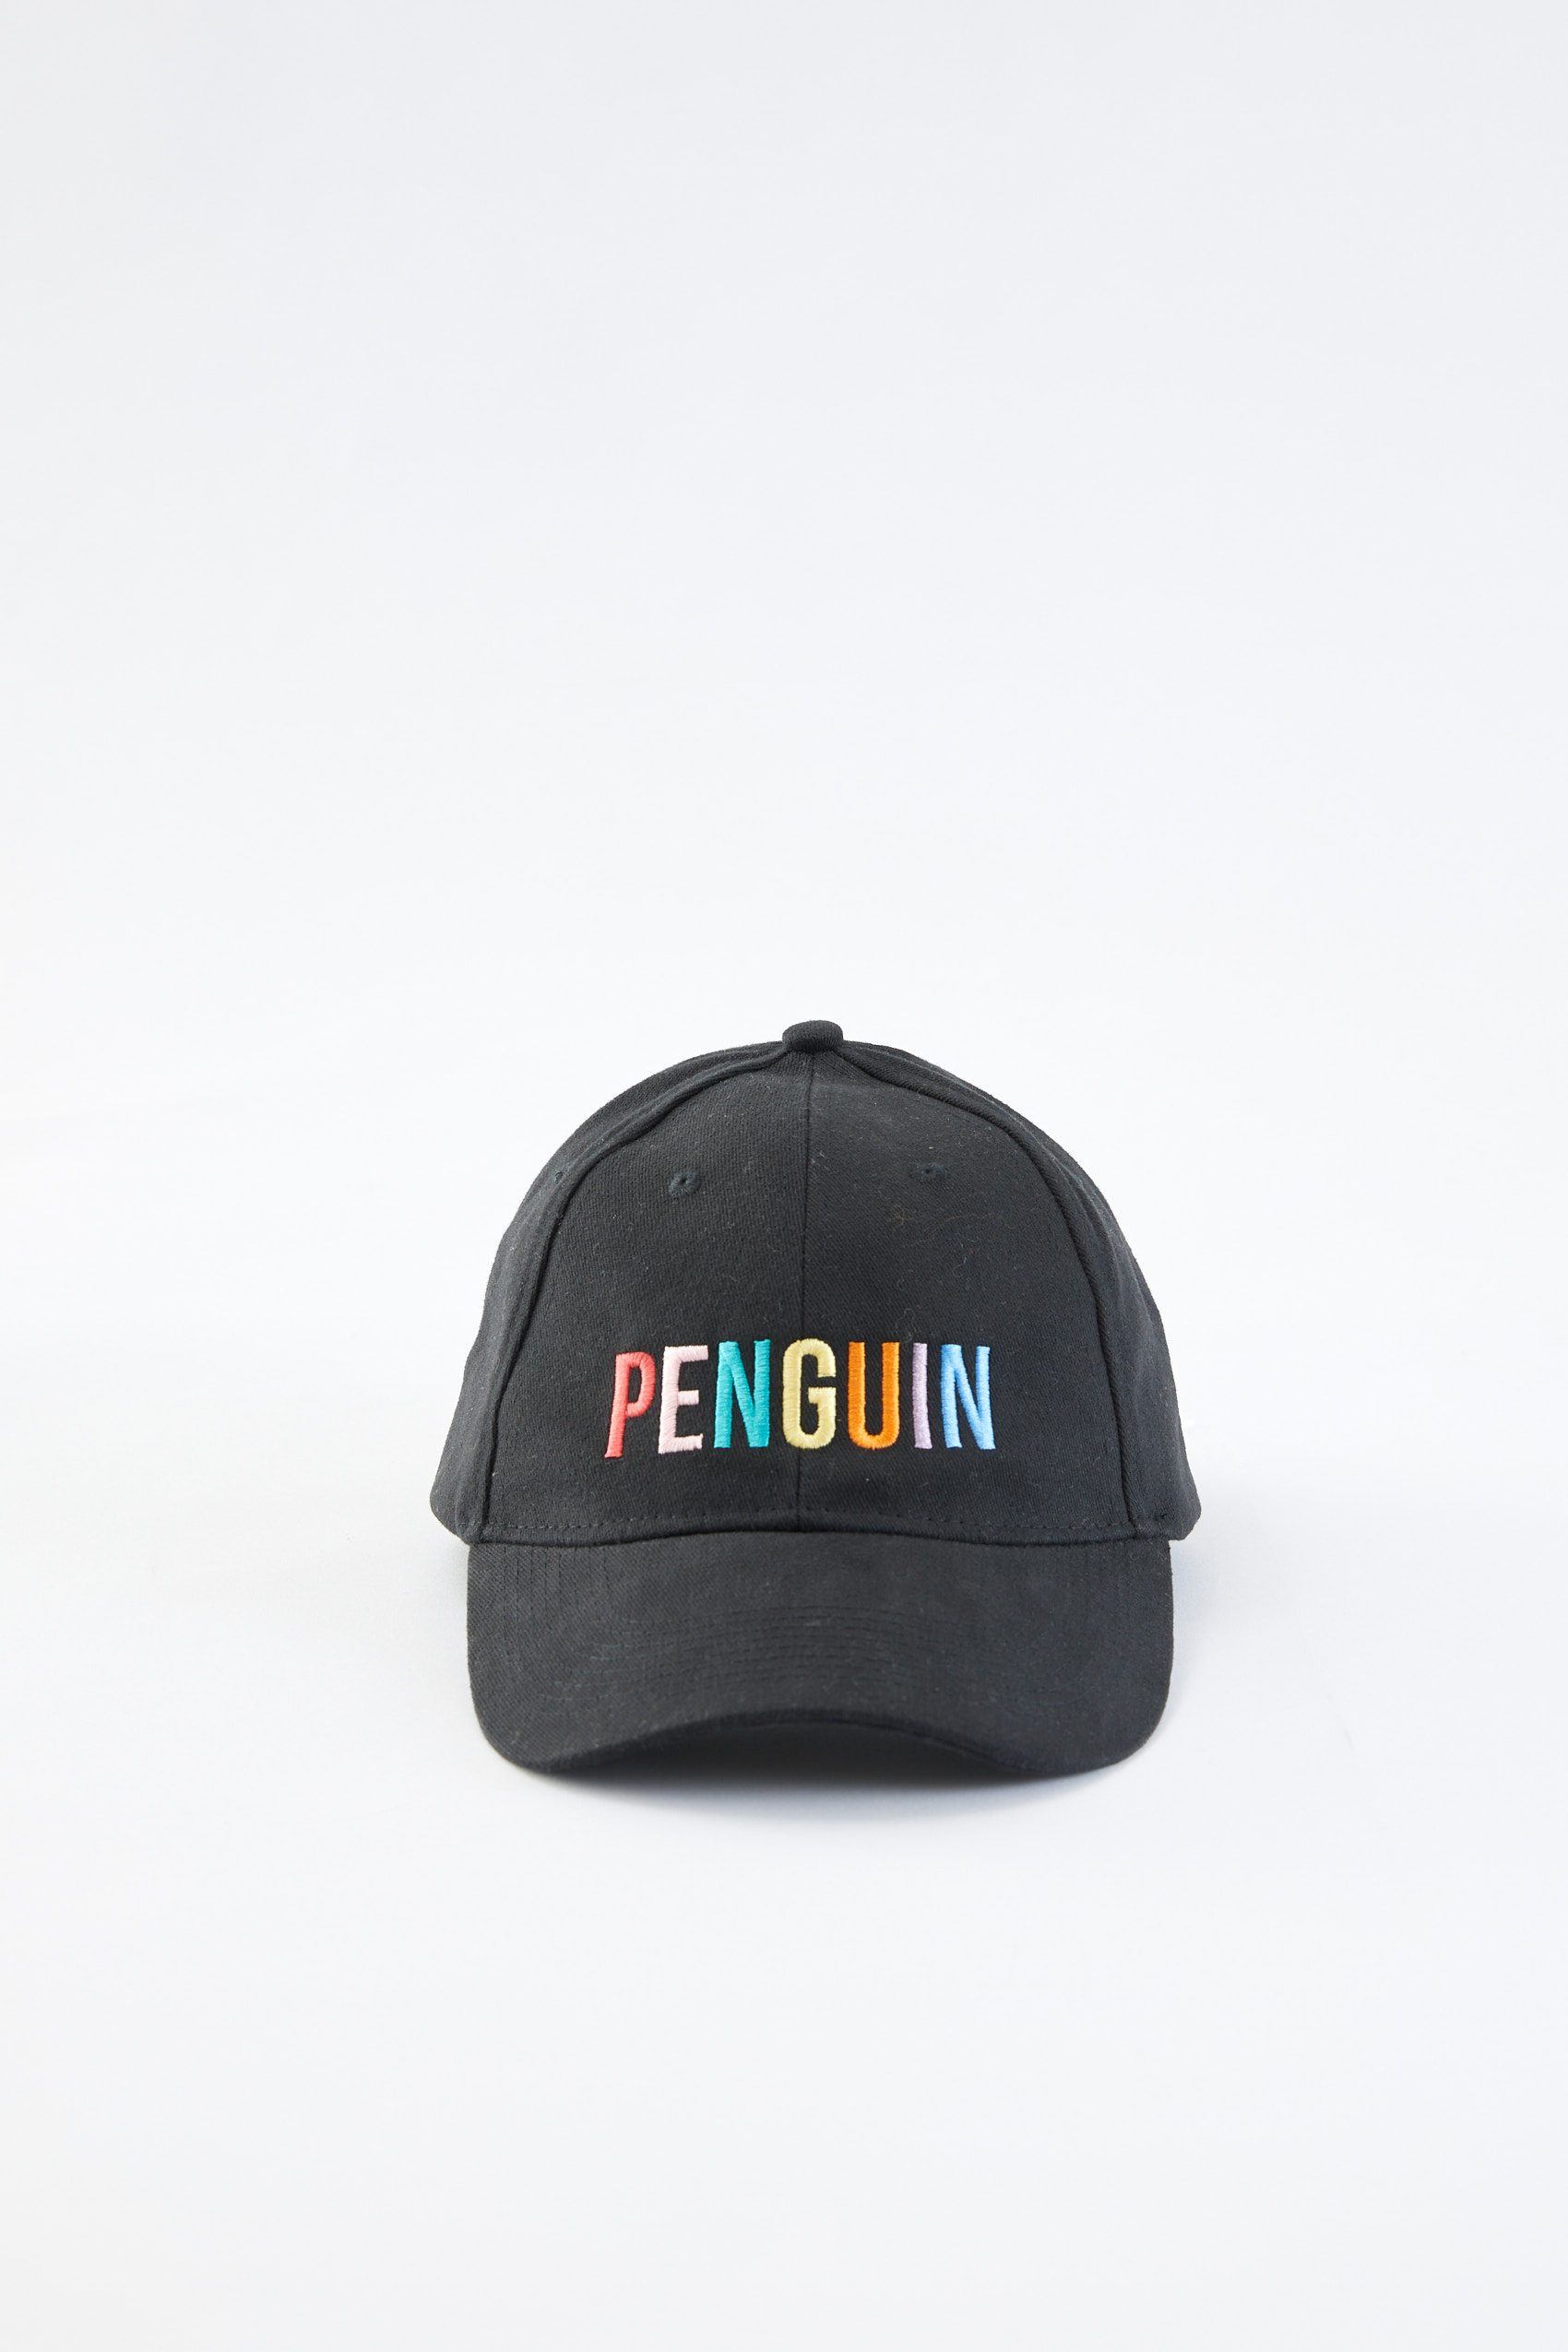 penguin_multicolor-baseball-cap_51-13-2022__picture-31184